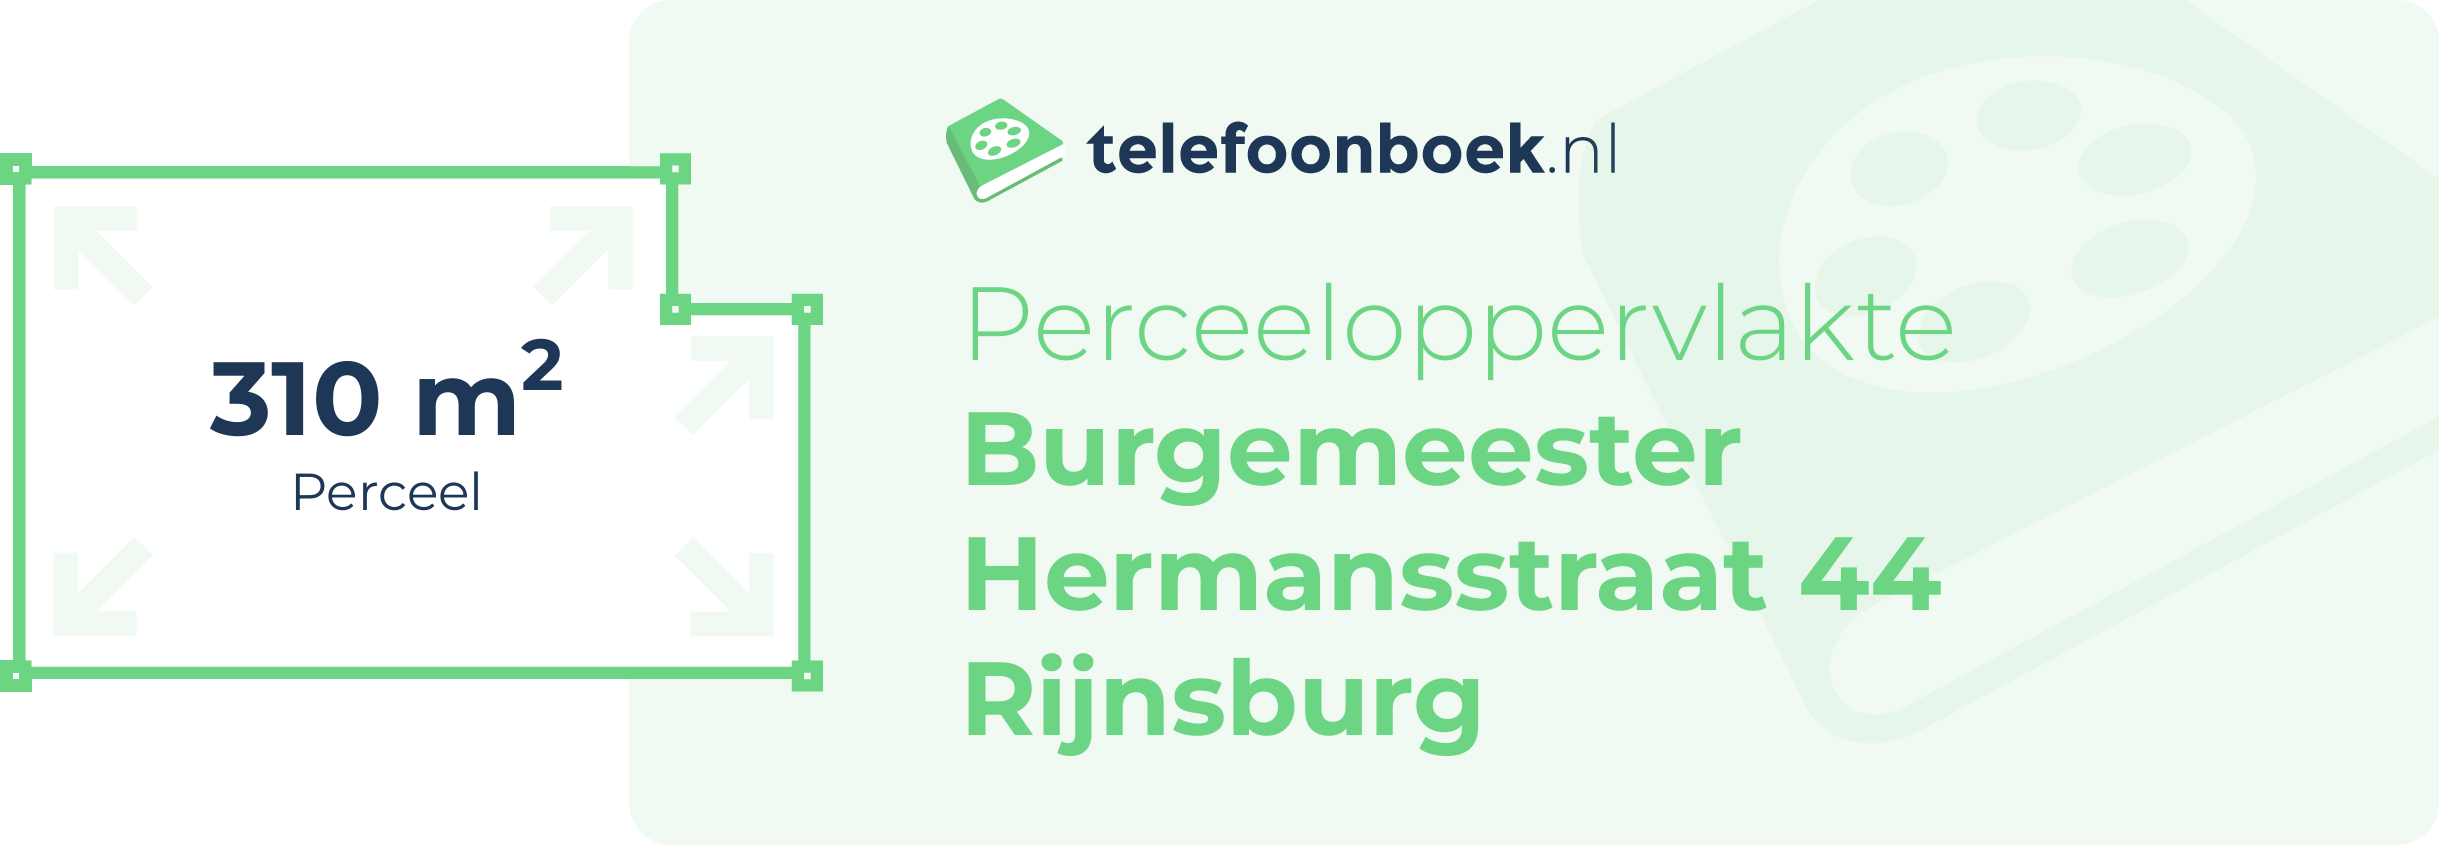 Perceeloppervlakte Burgemeester Hermansstraat 44 Rijnsburg